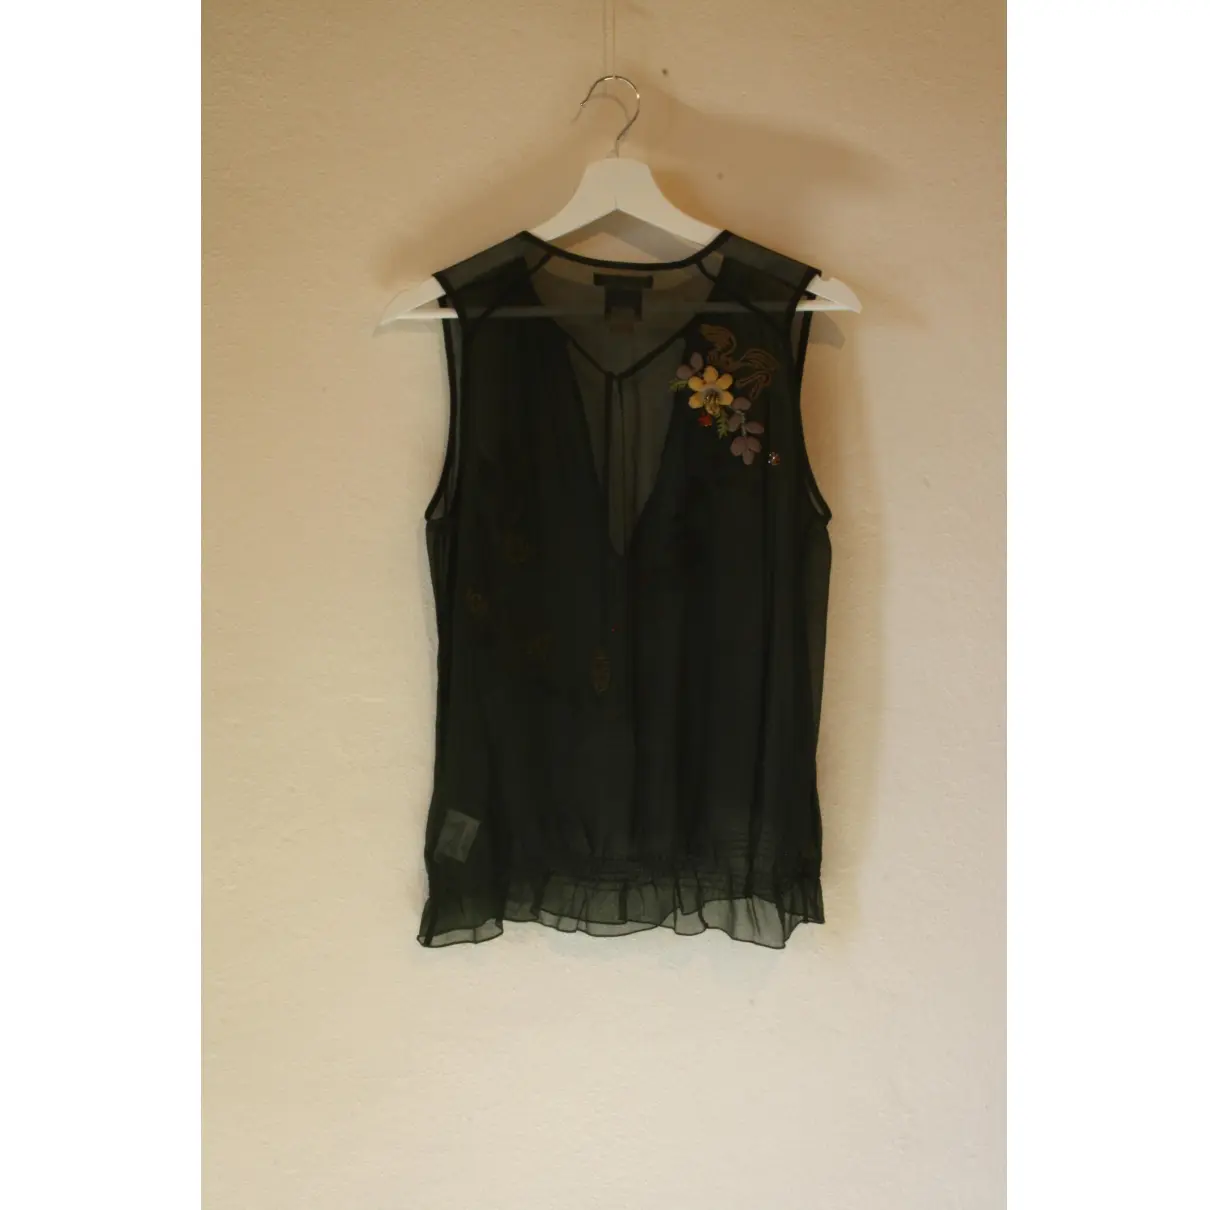 Buy Replay Silk blouse online